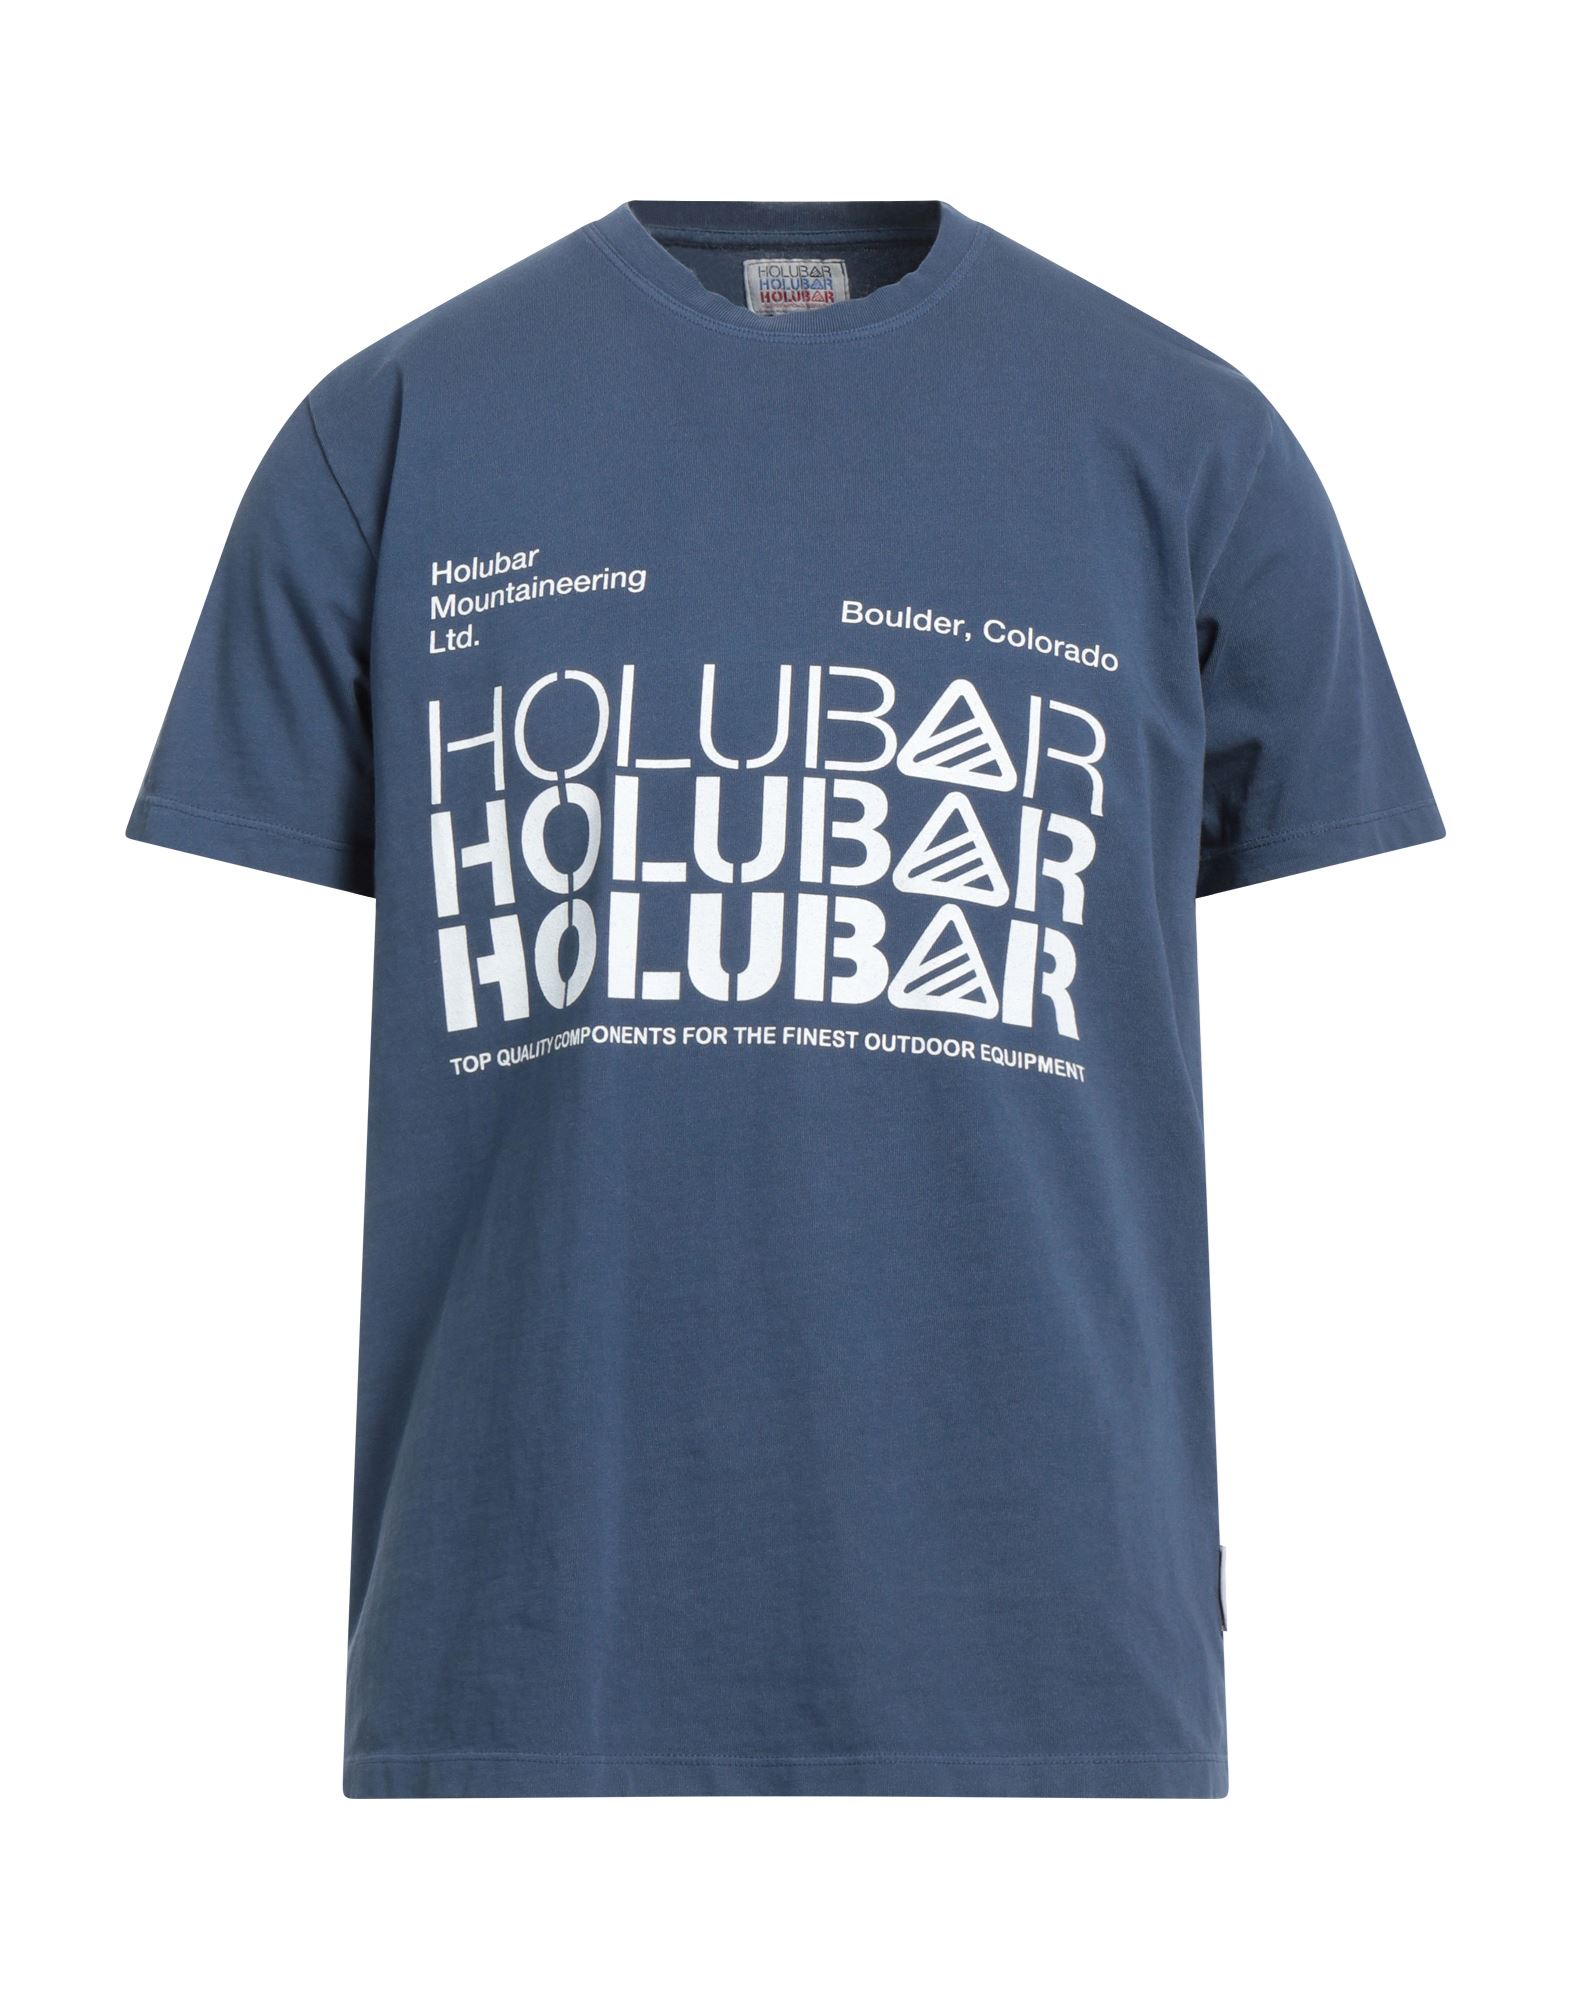 HOLUBAR T-shirts Herren Taubenblau von HOLUBAR